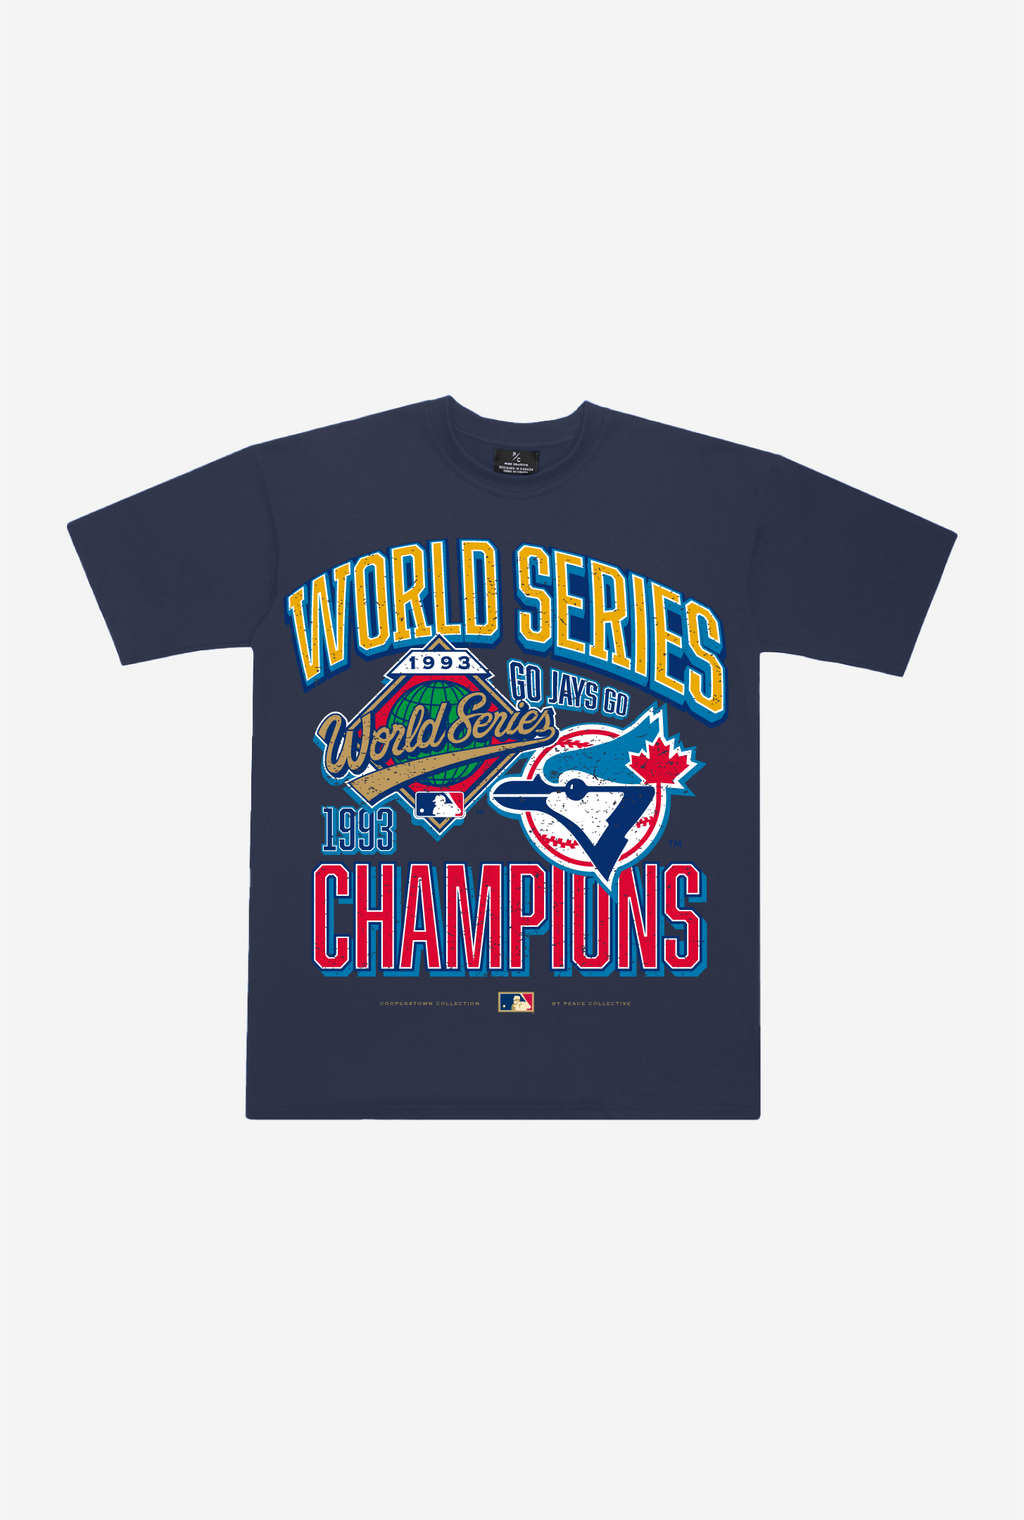 Vintage Toronto Blue Jays 1993 World Series Champions MLB Baseball Shirt  Mens L